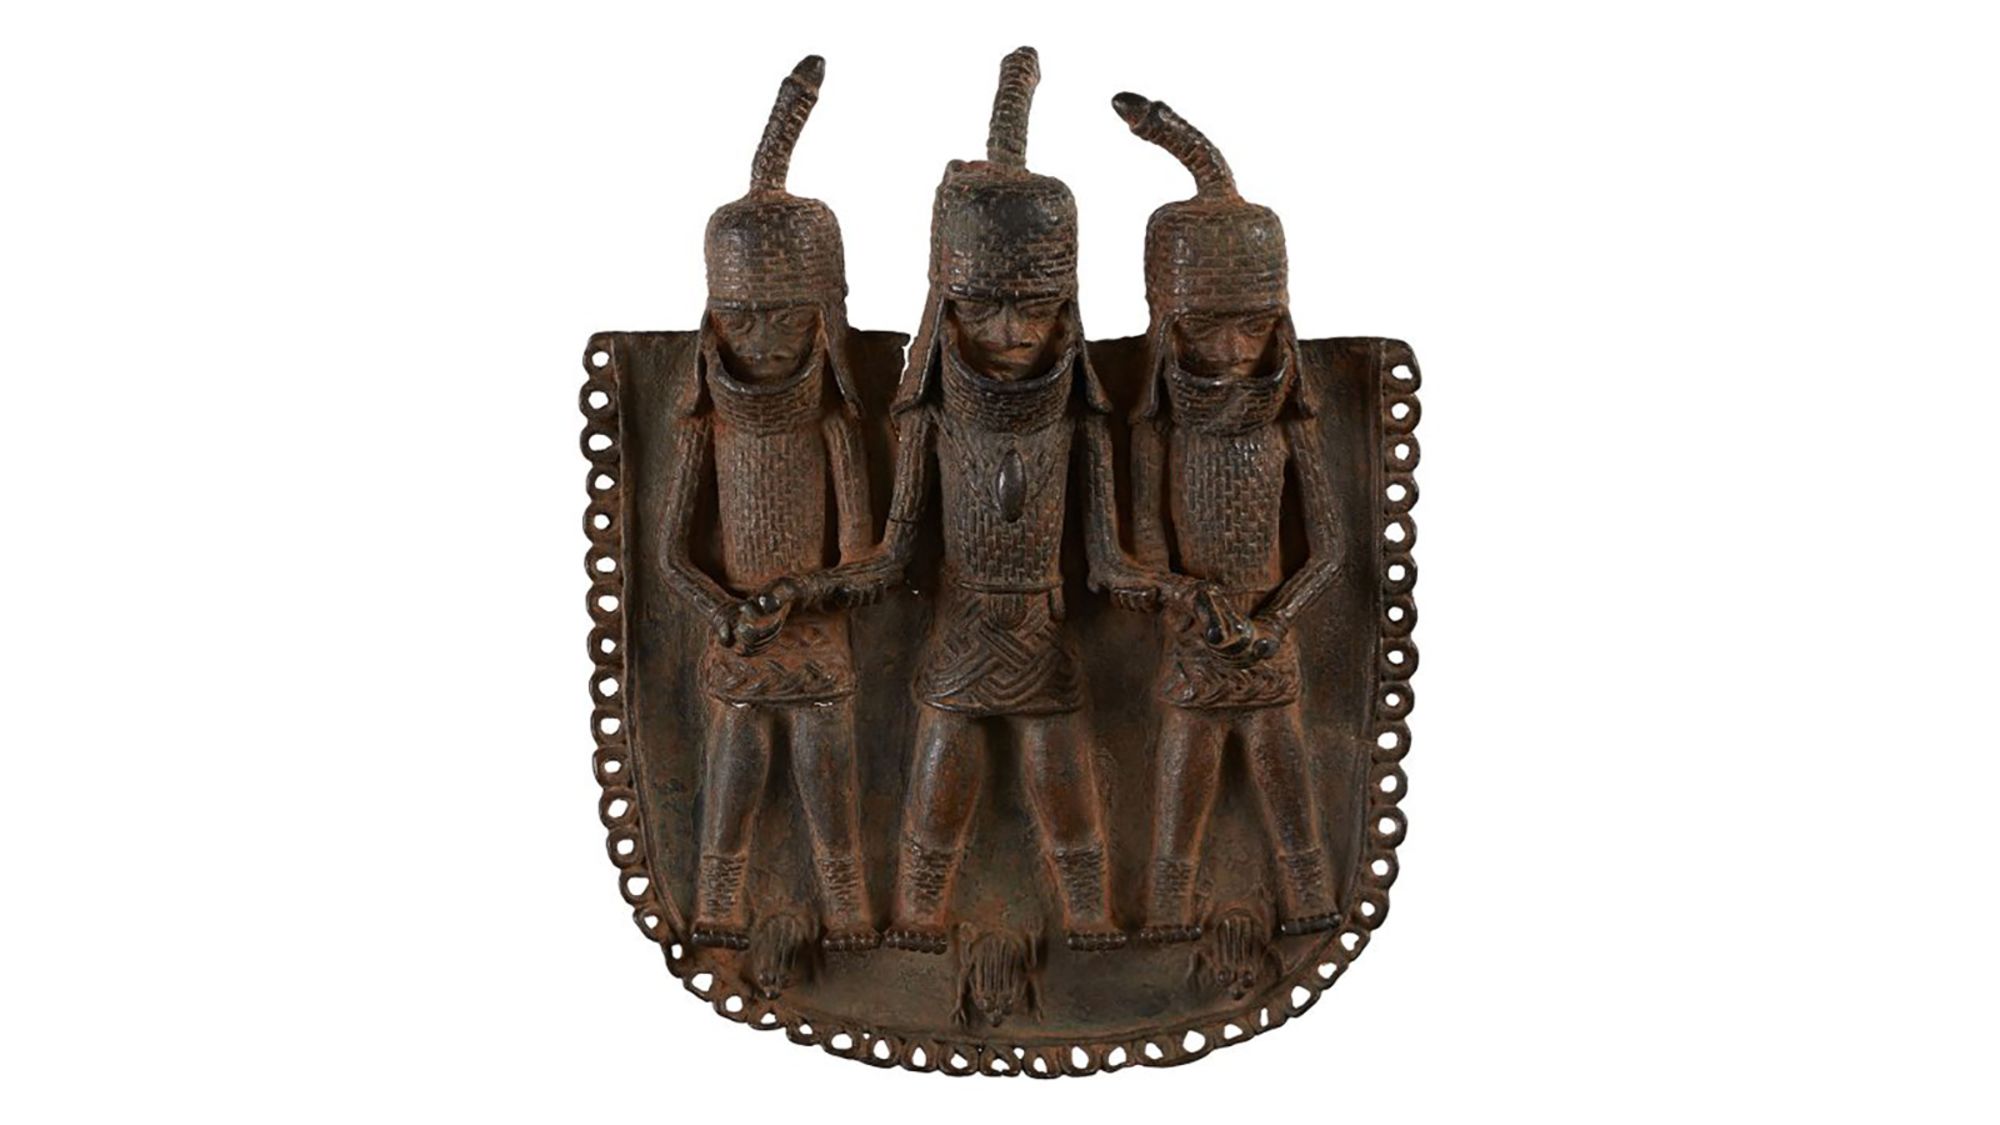 02 horniman museum benin bronzes nigeria